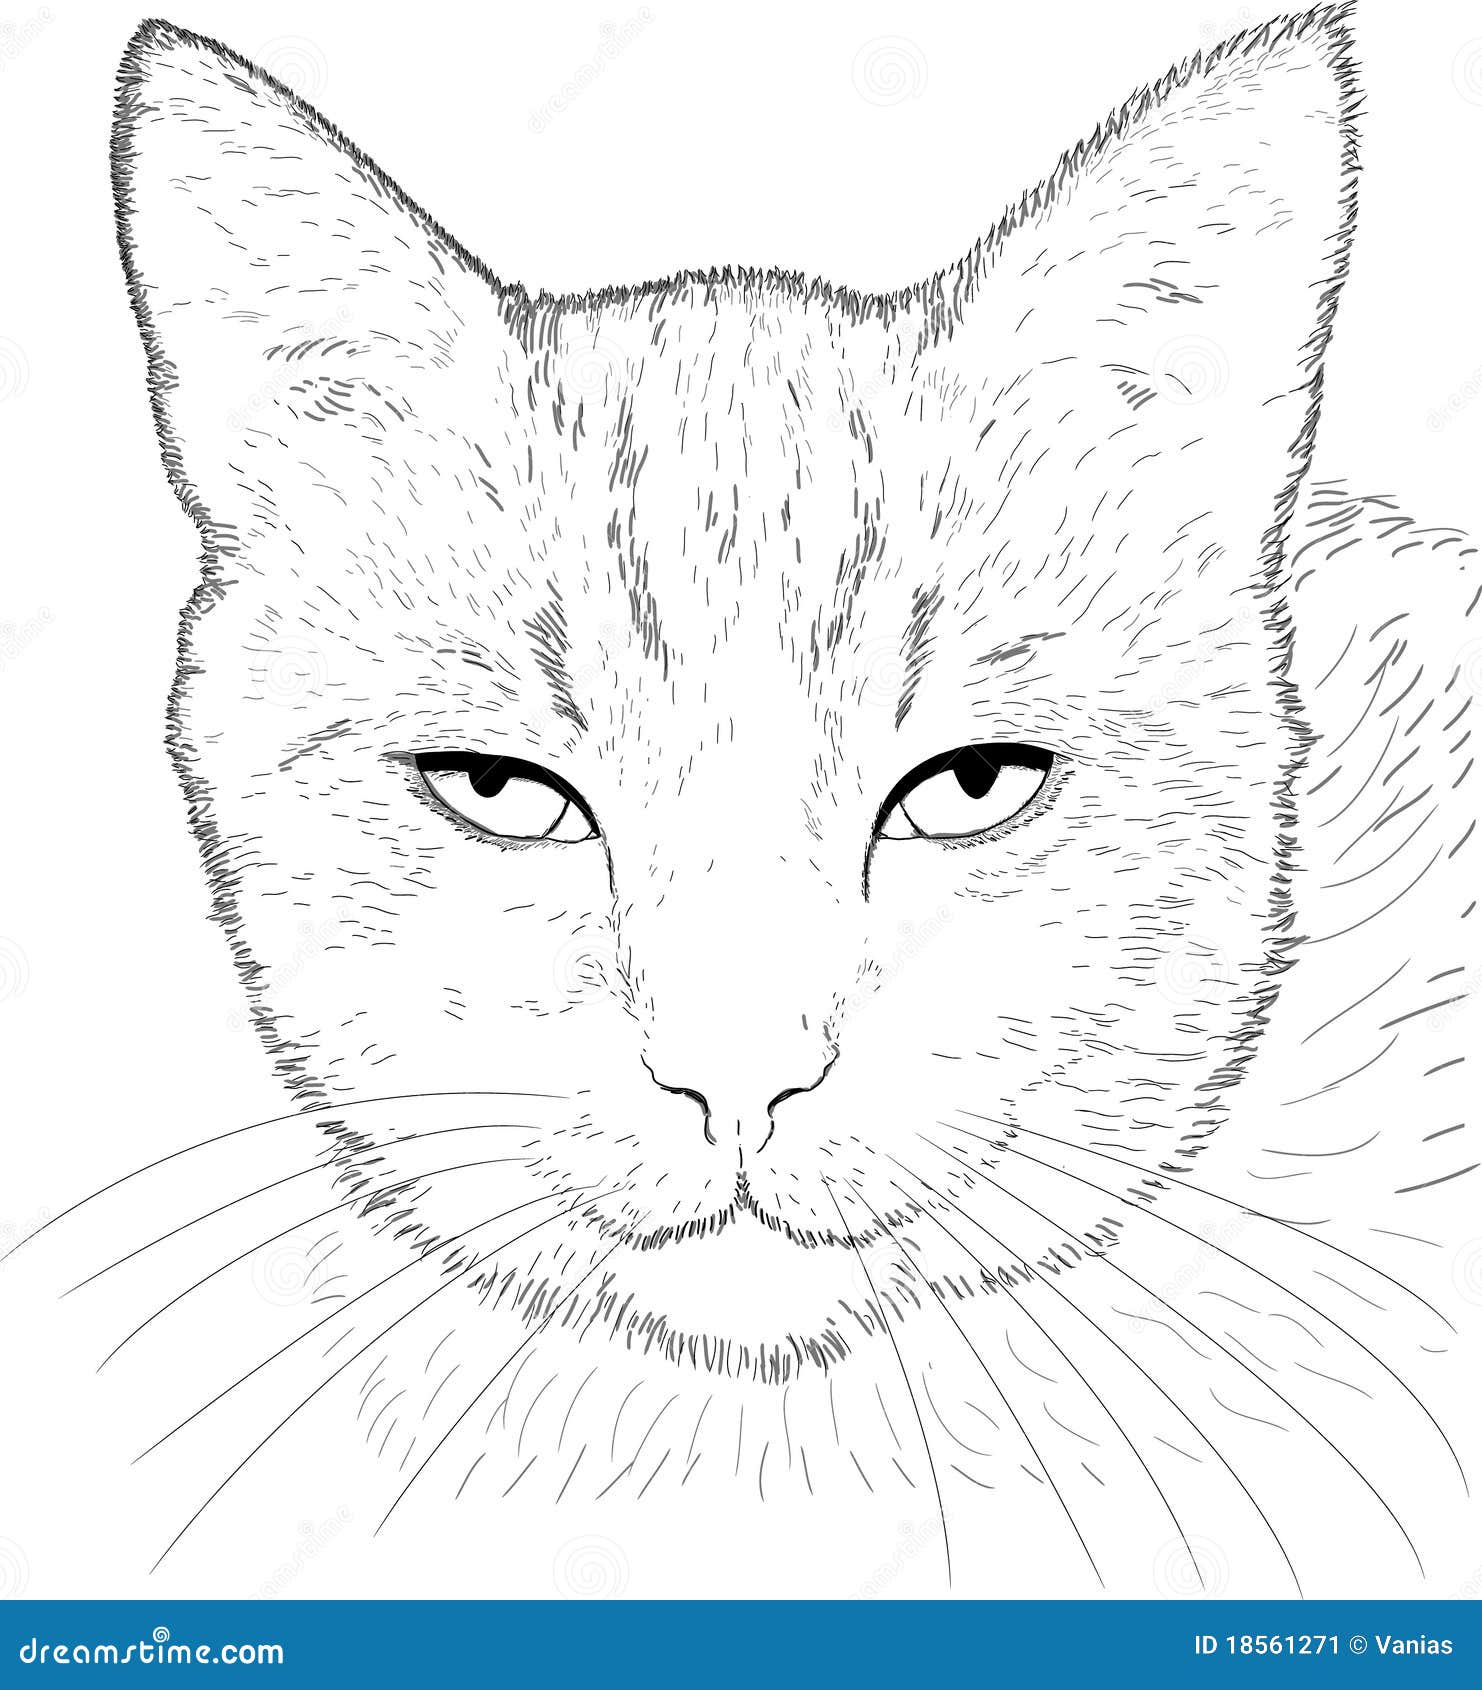 Cat Drawing Stock Image - Image: 18561271